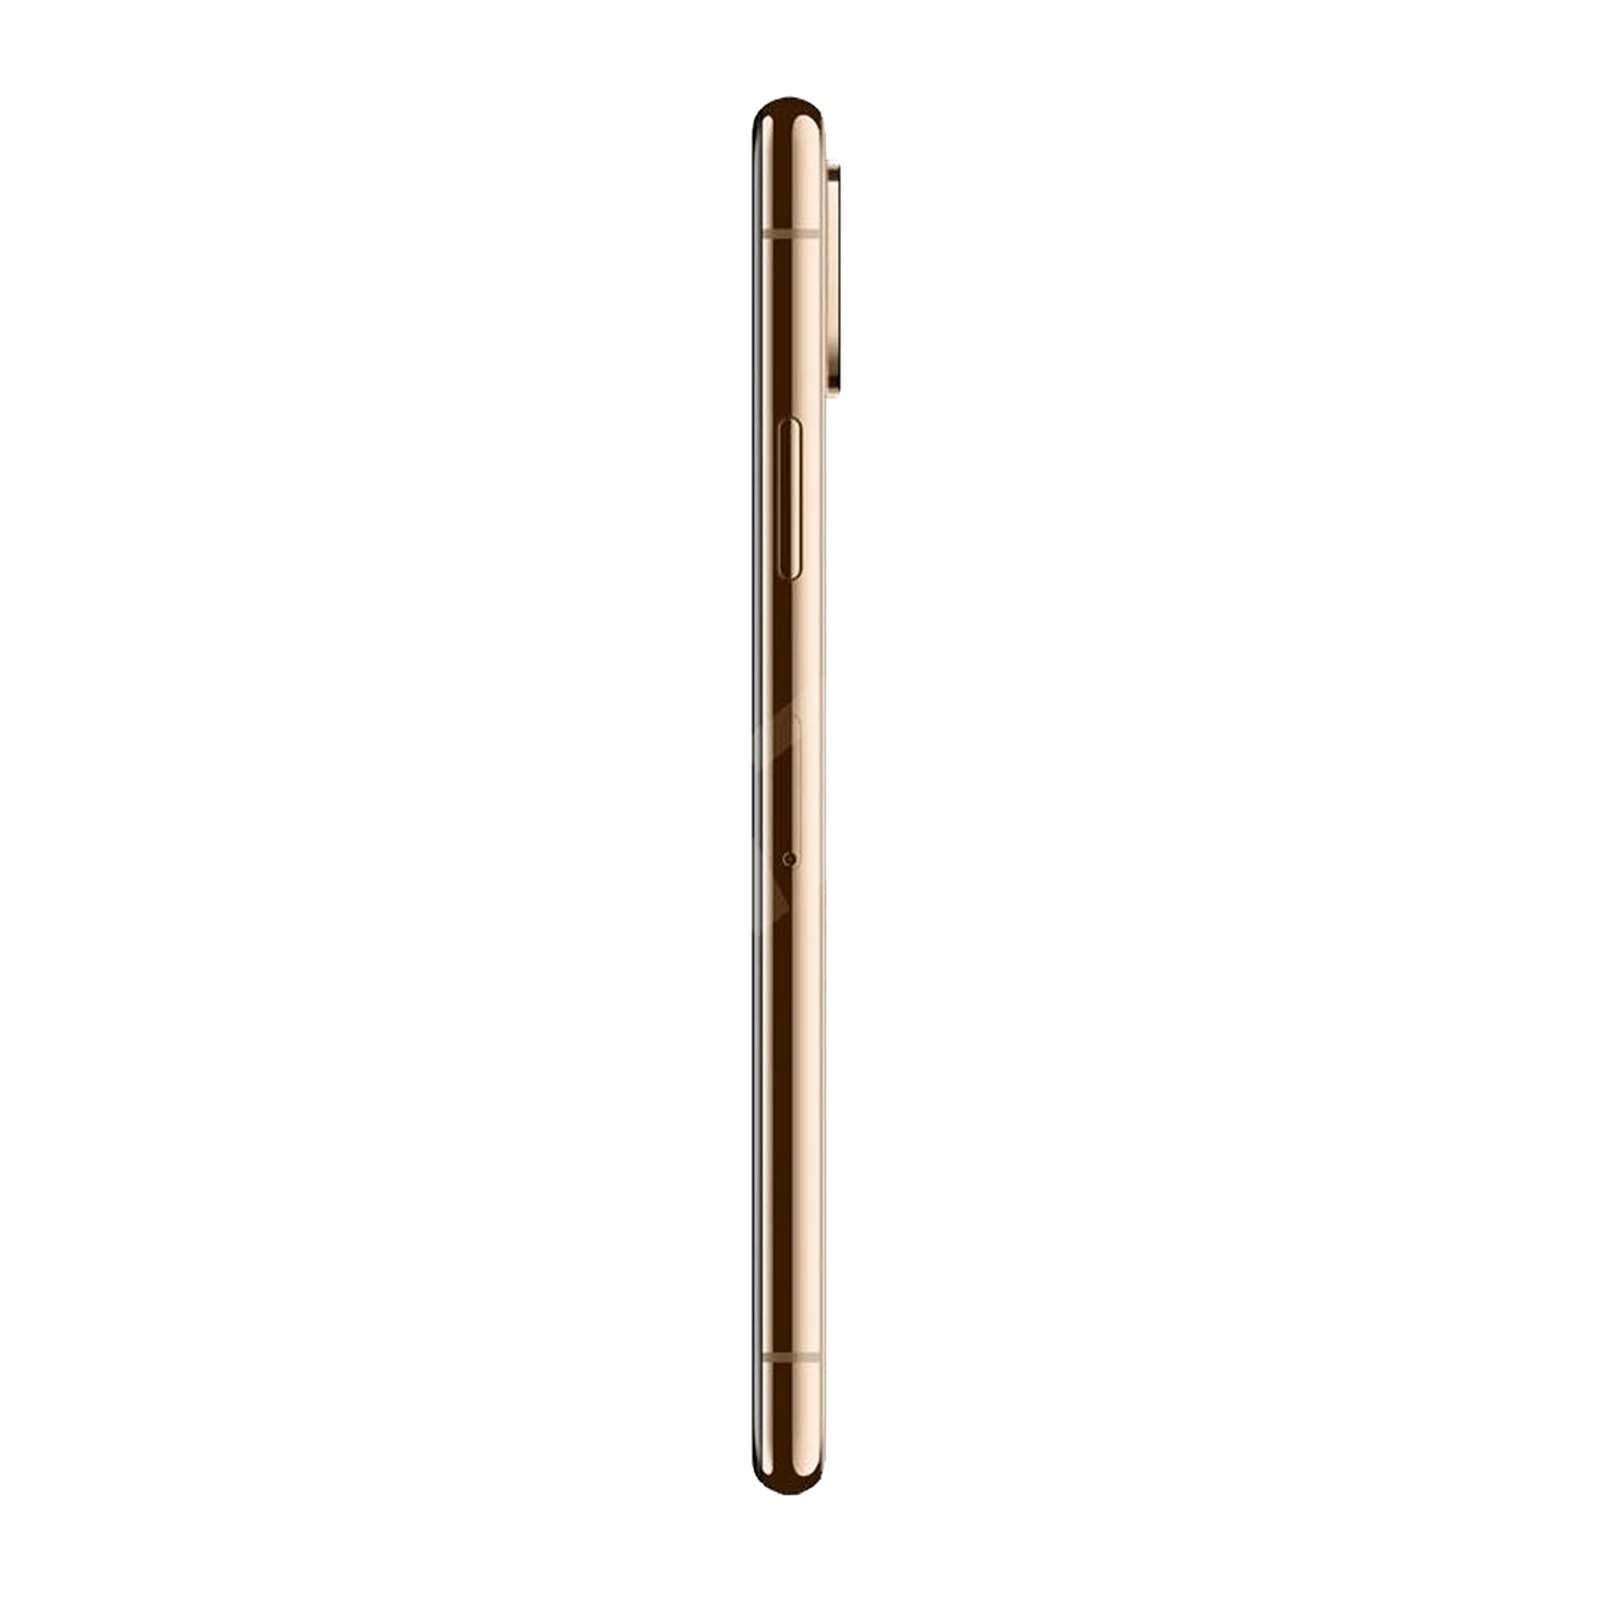 Apple iPhone XS Max 512GB Gold – Loop Mobile - US